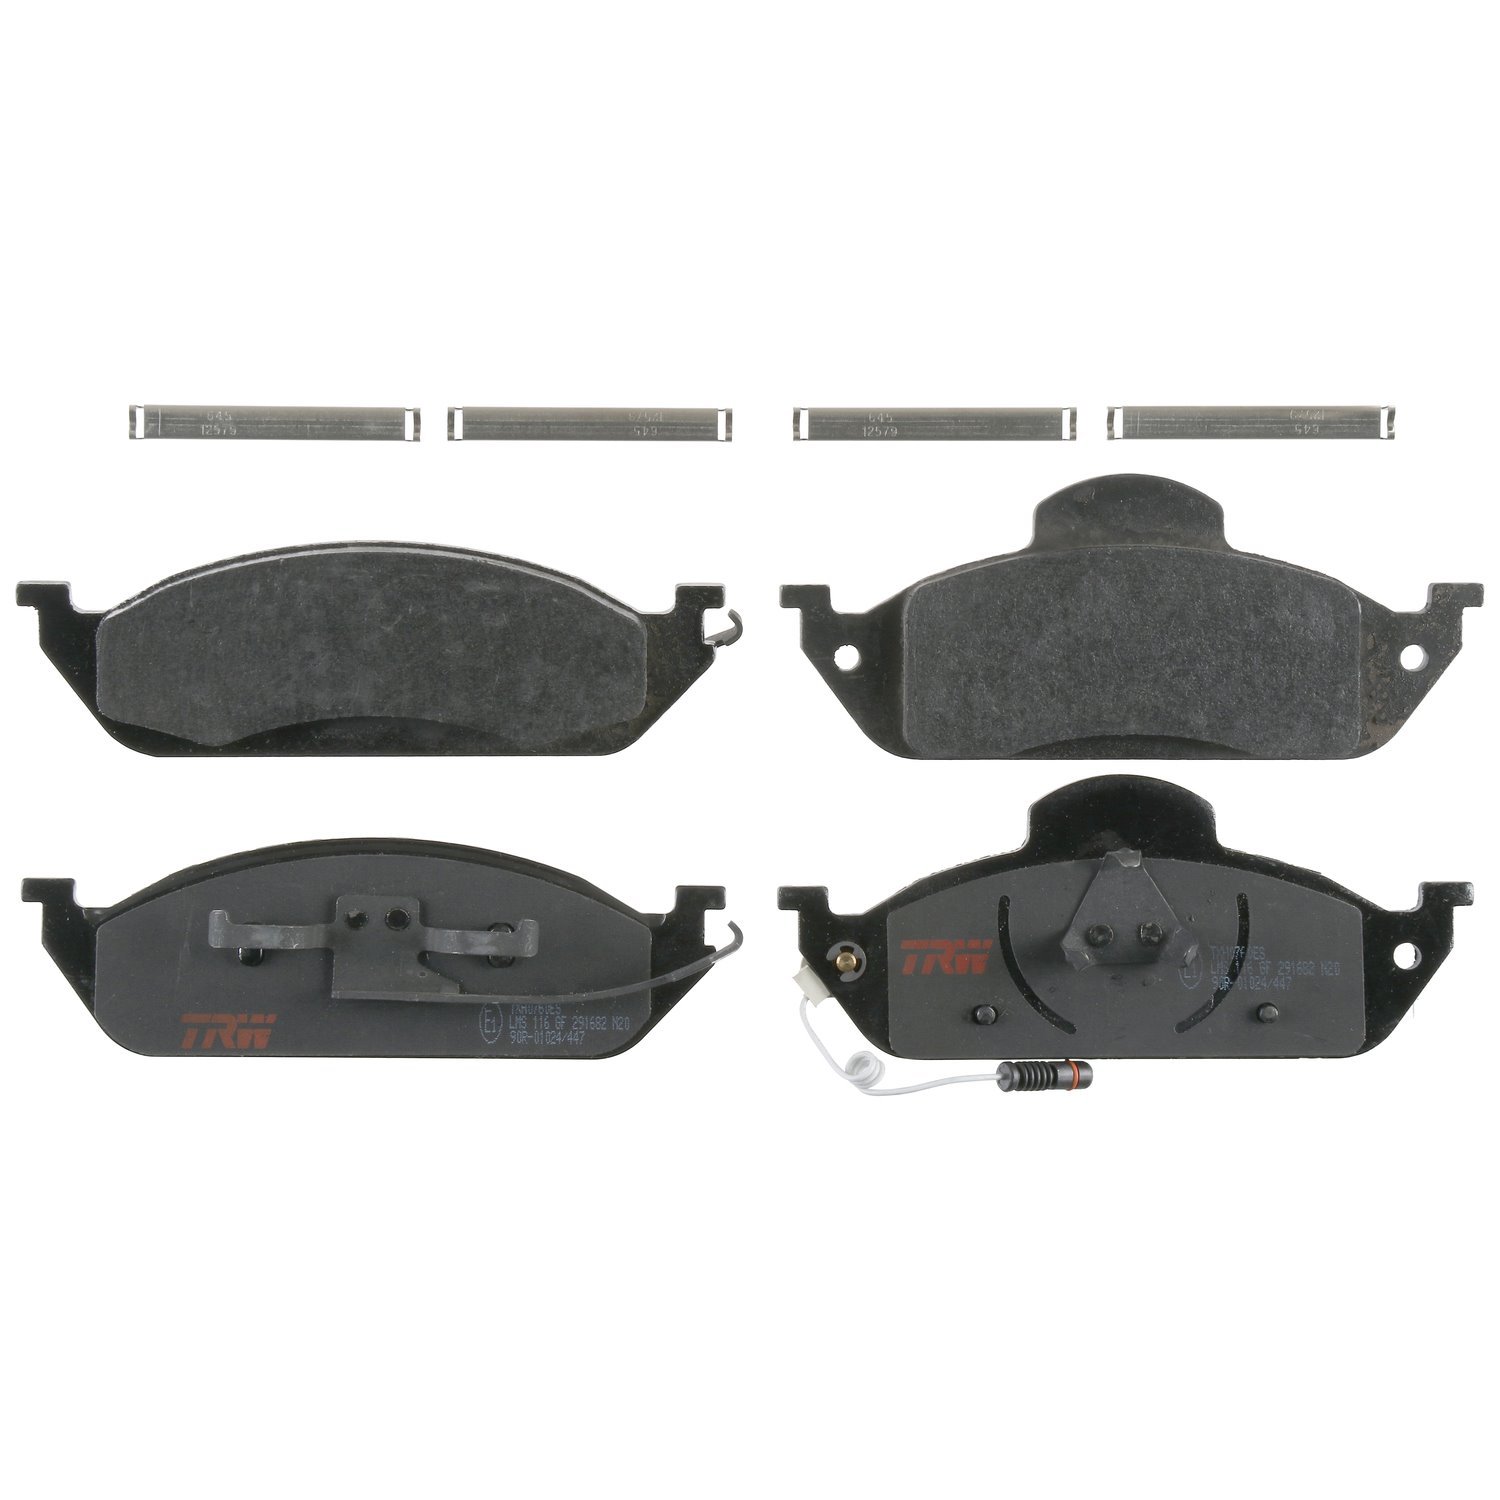 TXH0760ES Ultra-Series Disc Brake Pad Set for Mercedes-Benz ML320 2003-1998, ML350 2005-2003, ML430 1999, Position: Front